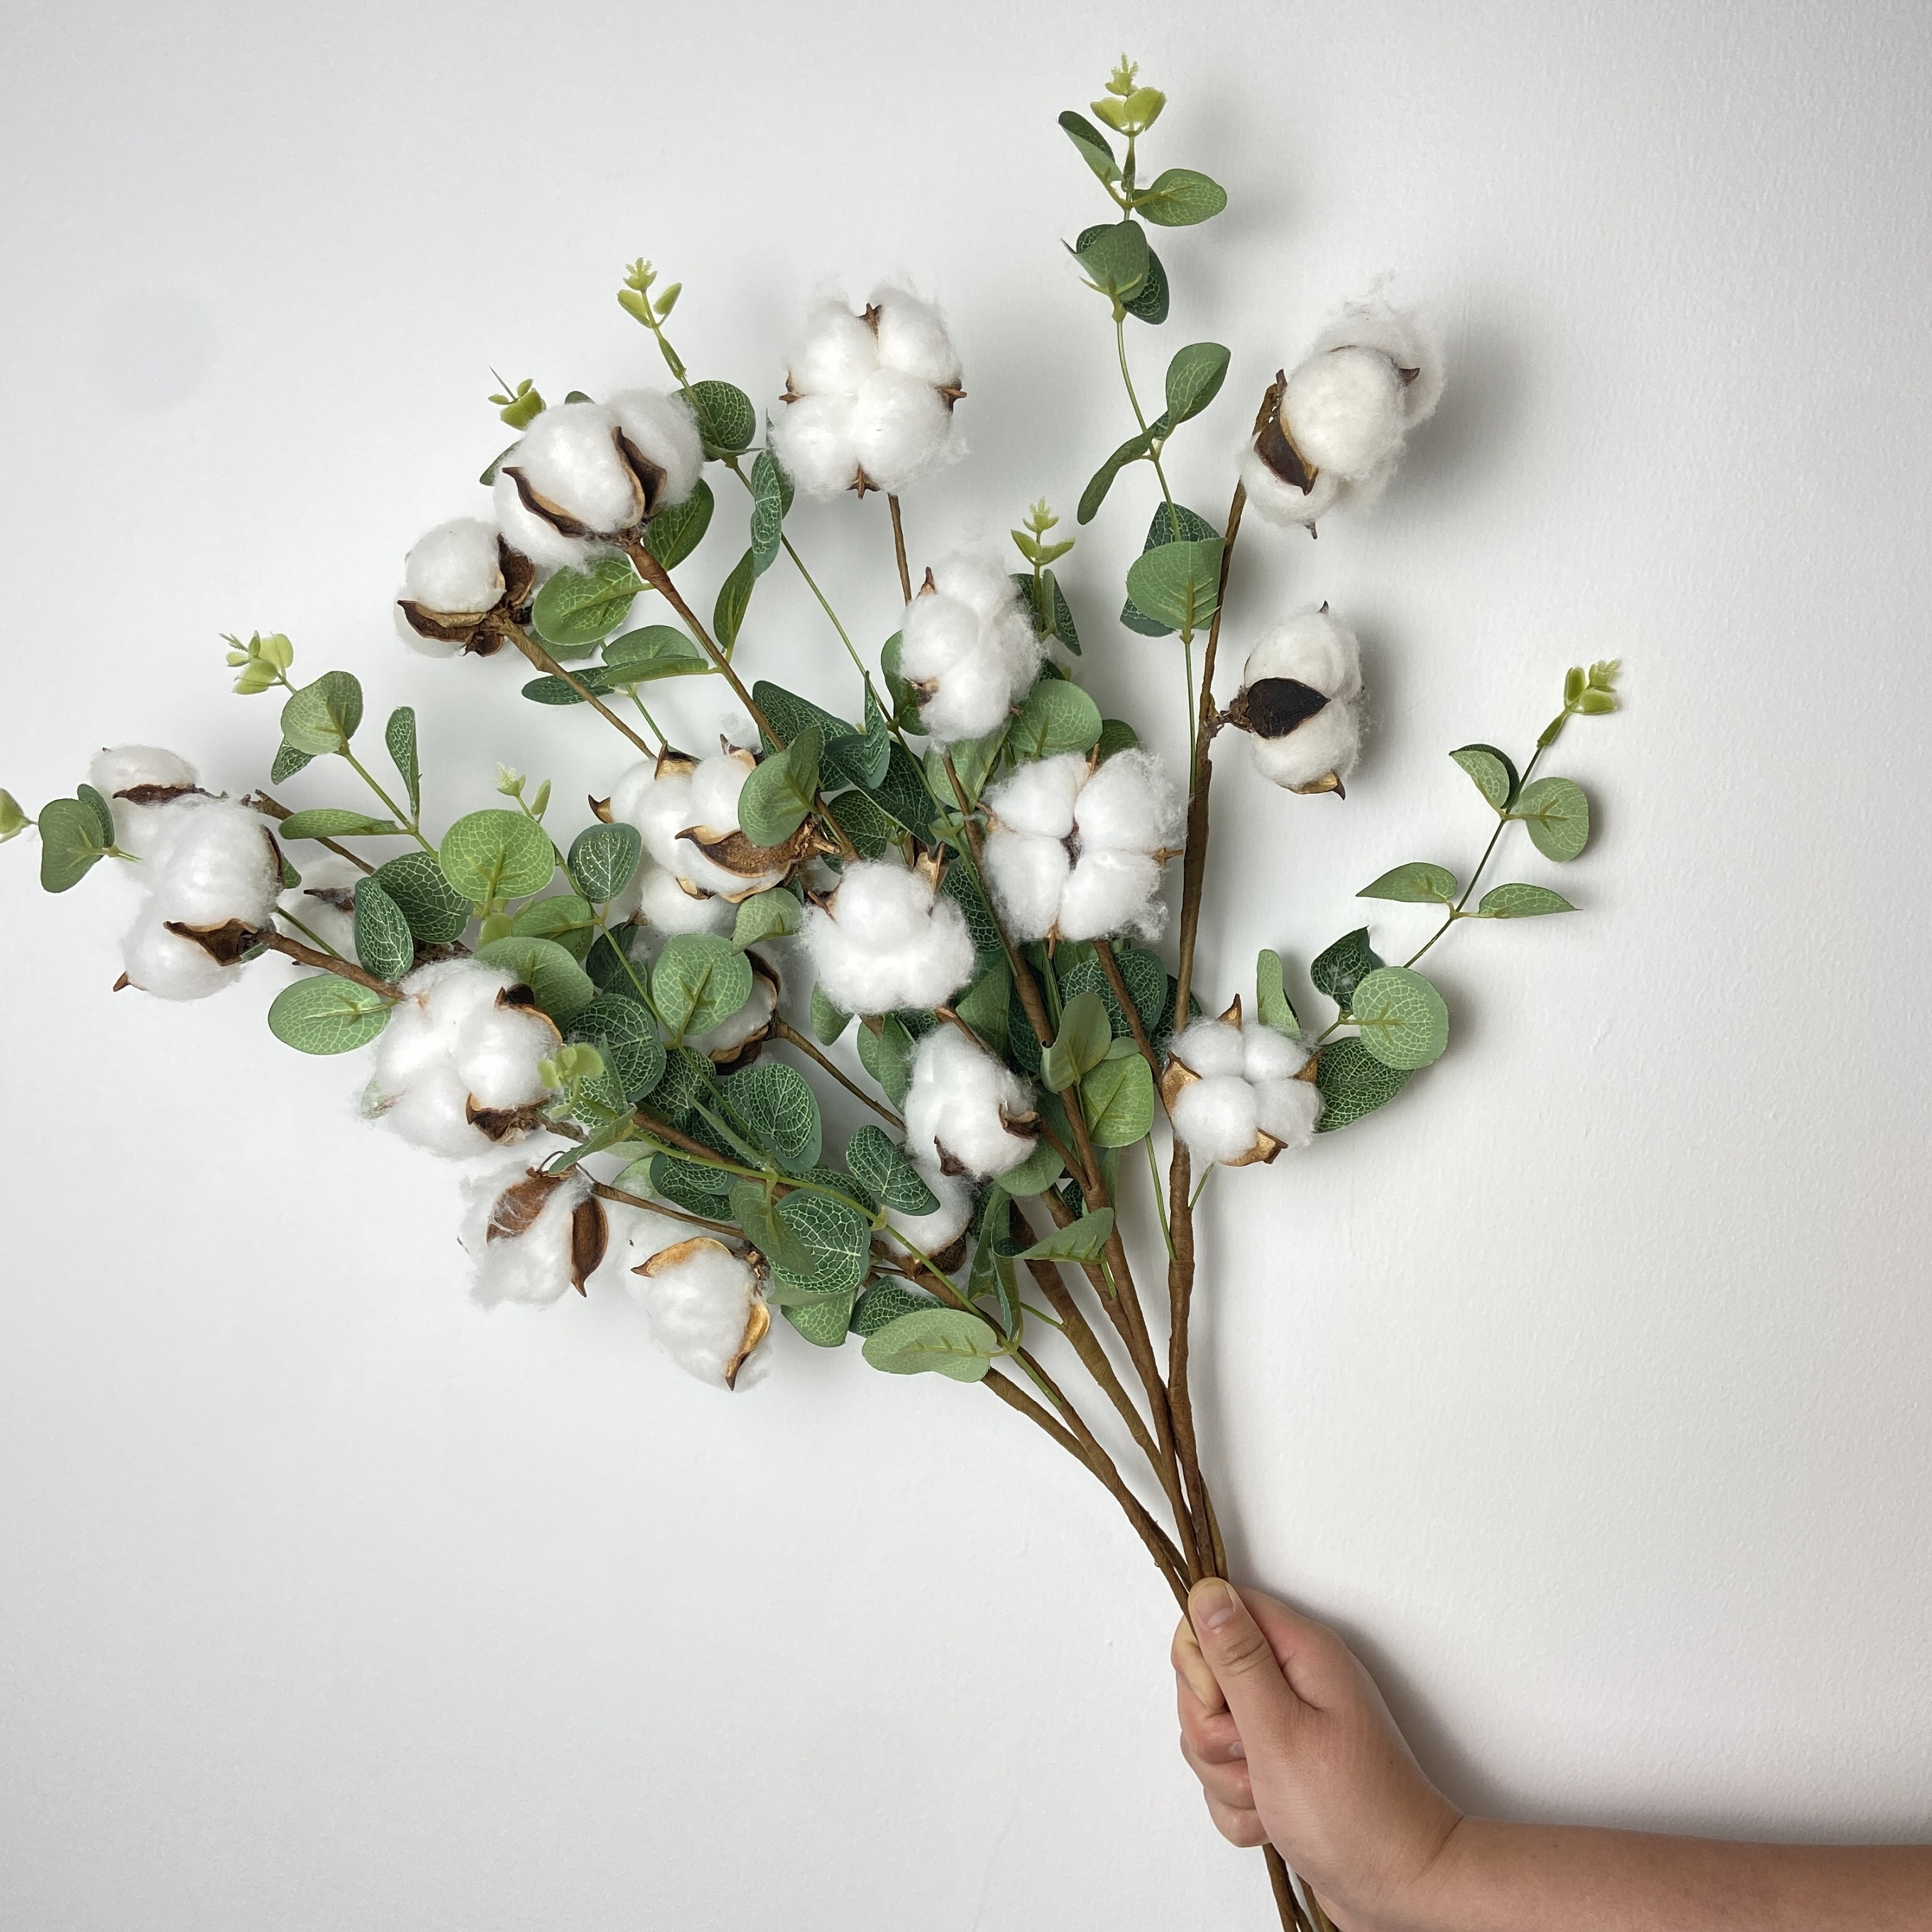  XHSP 5 tallos de algodón, flores de algodón natural, púas de  algodón seco, rama de flores secas de 21 pulgadas, 10 cabezales, relleno de  exhibición de granja, para decoración de boda